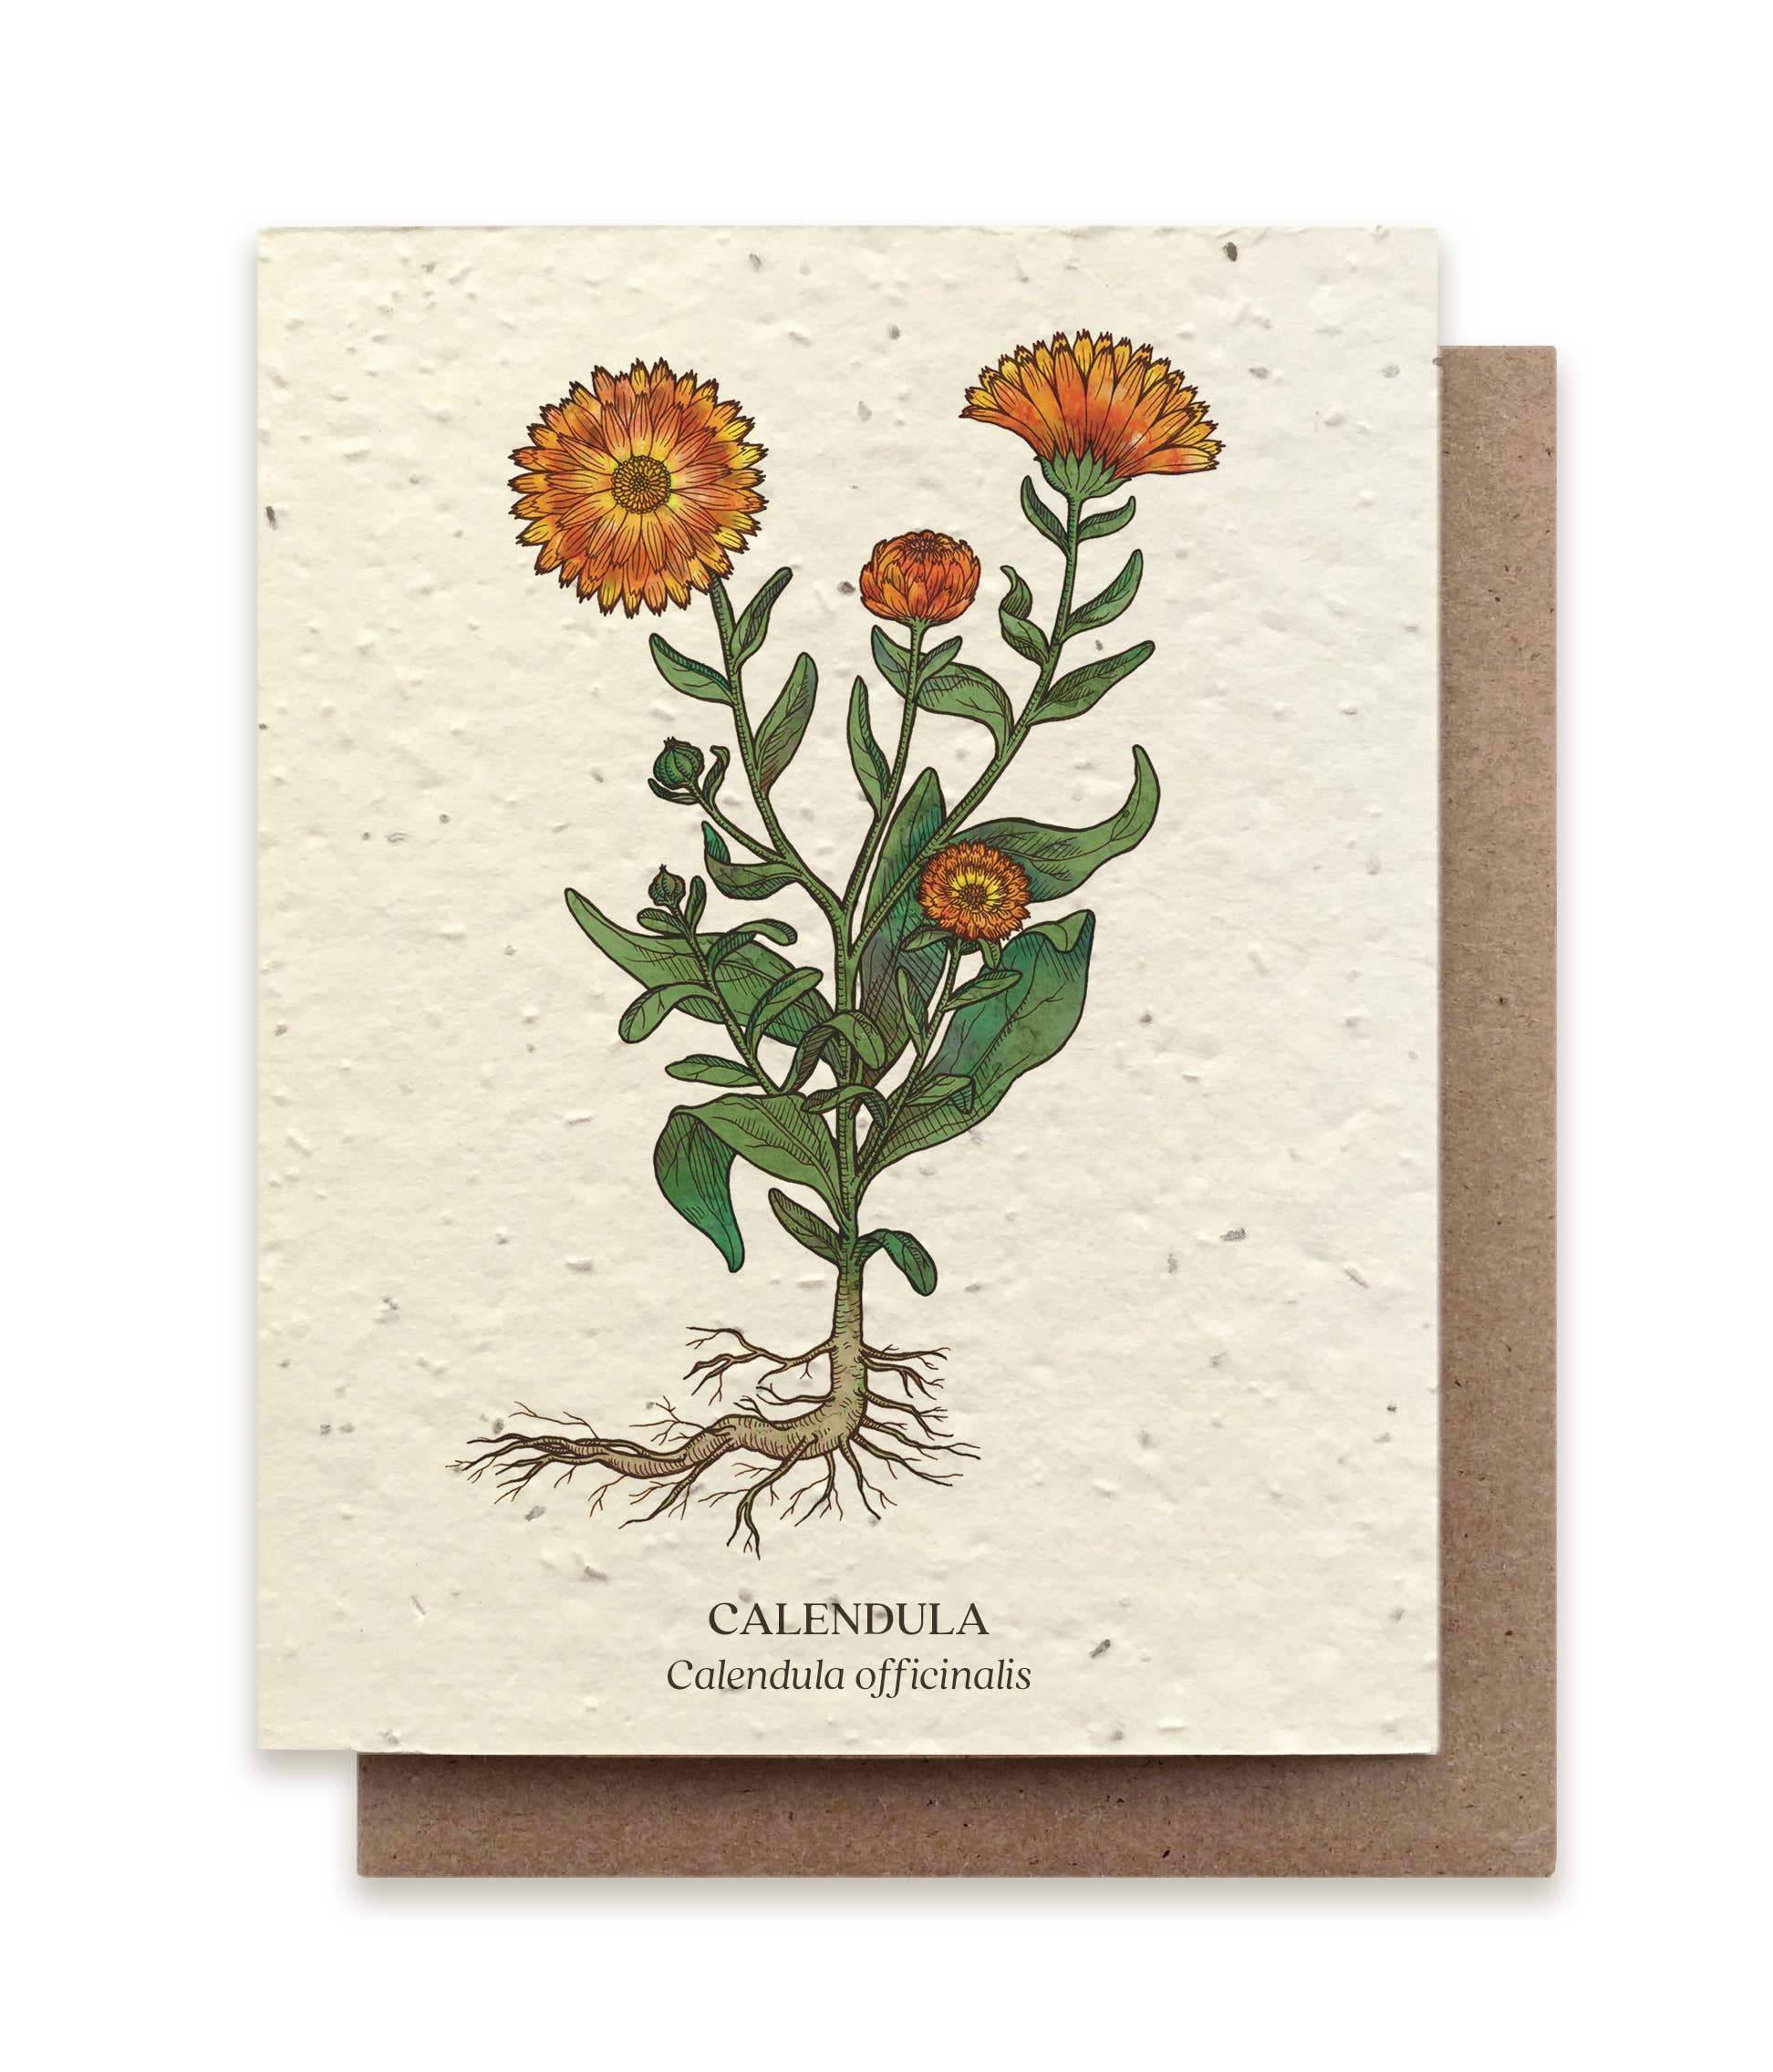 Calendula Plantable Wildflower Seed Card